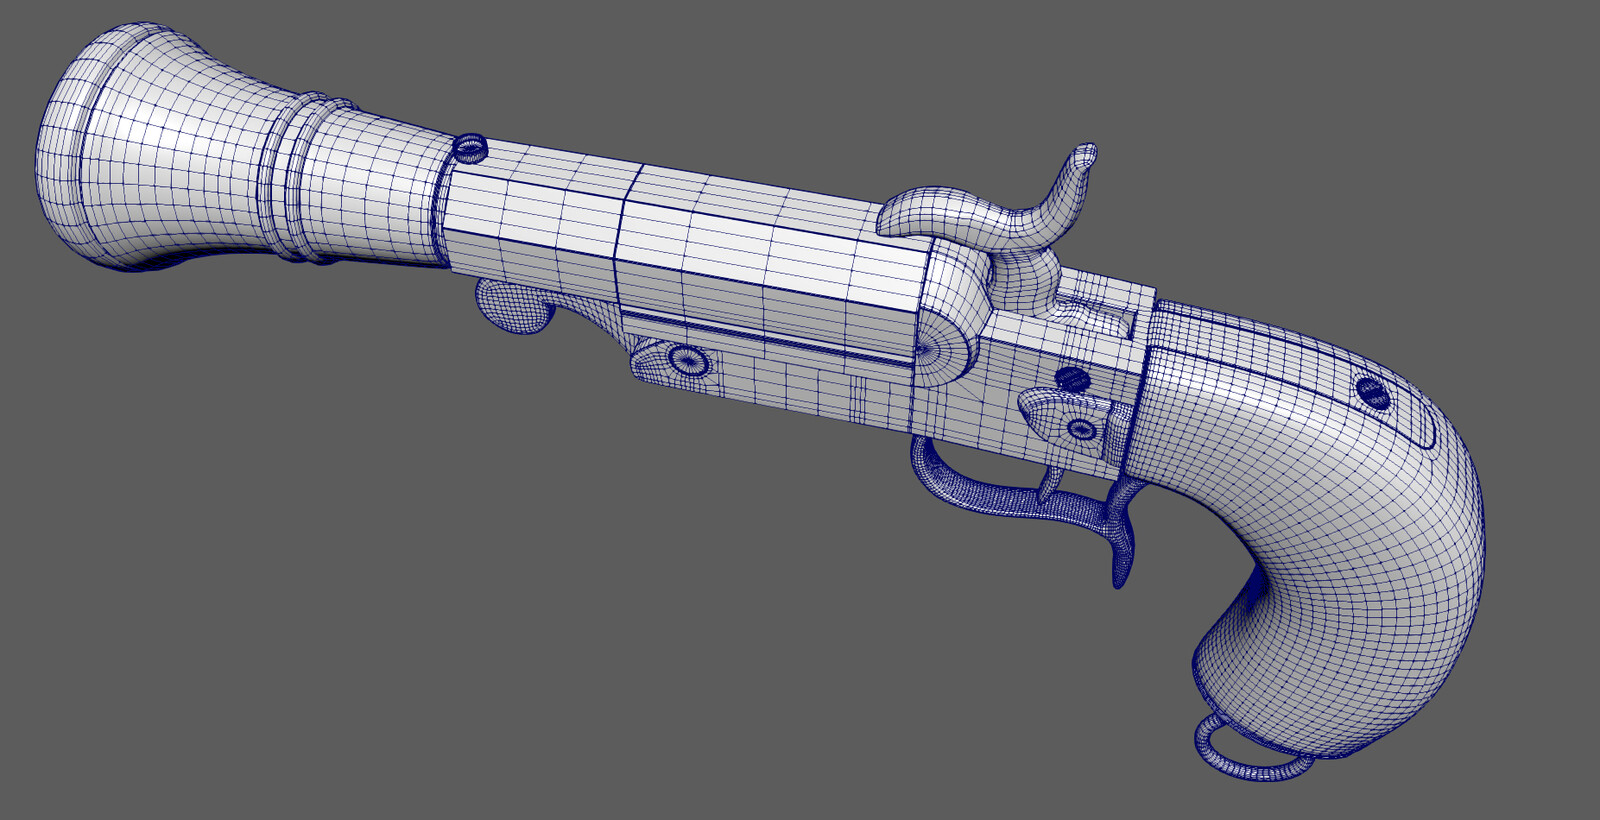 A Blunderbuss pistol model I created in Maya 2019. Maybe a little too dense...